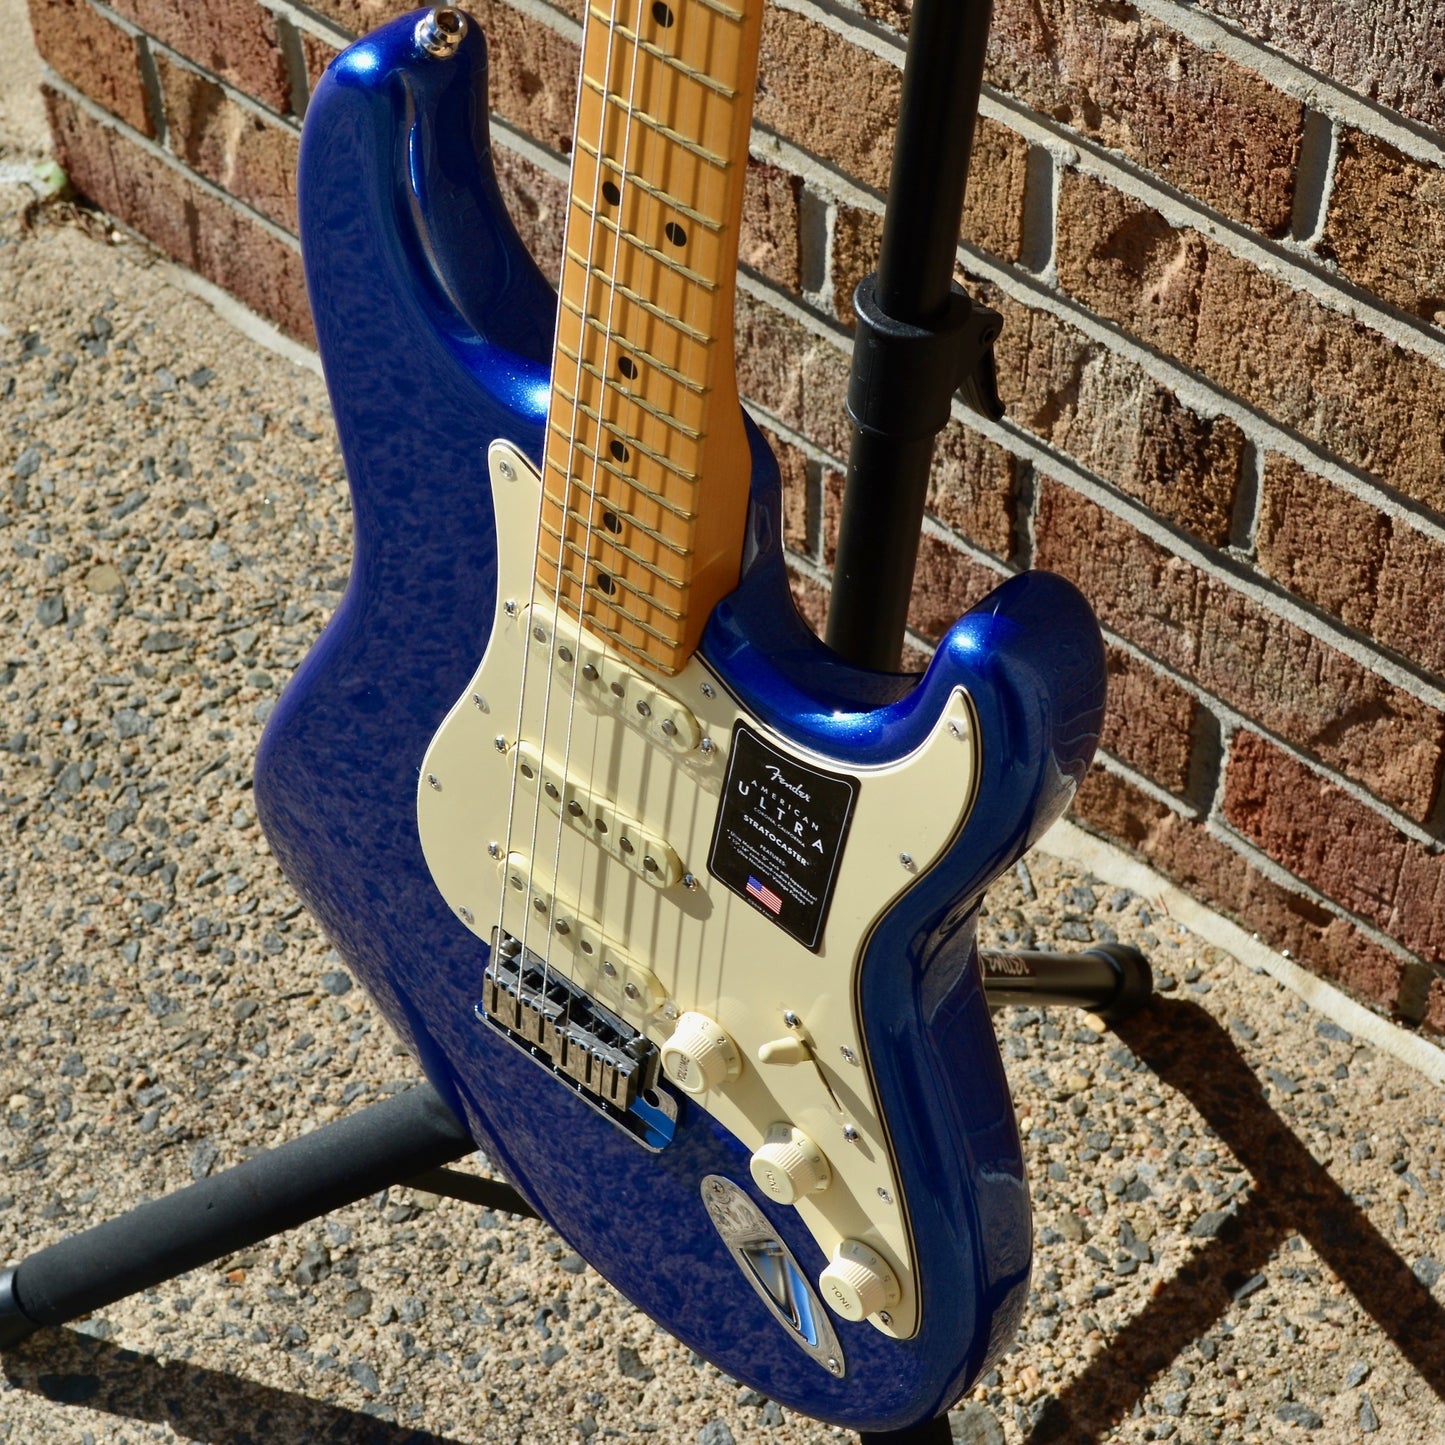 Fender American Ultra Stratocaster®, Maple Fingerboard, Cobra Blue